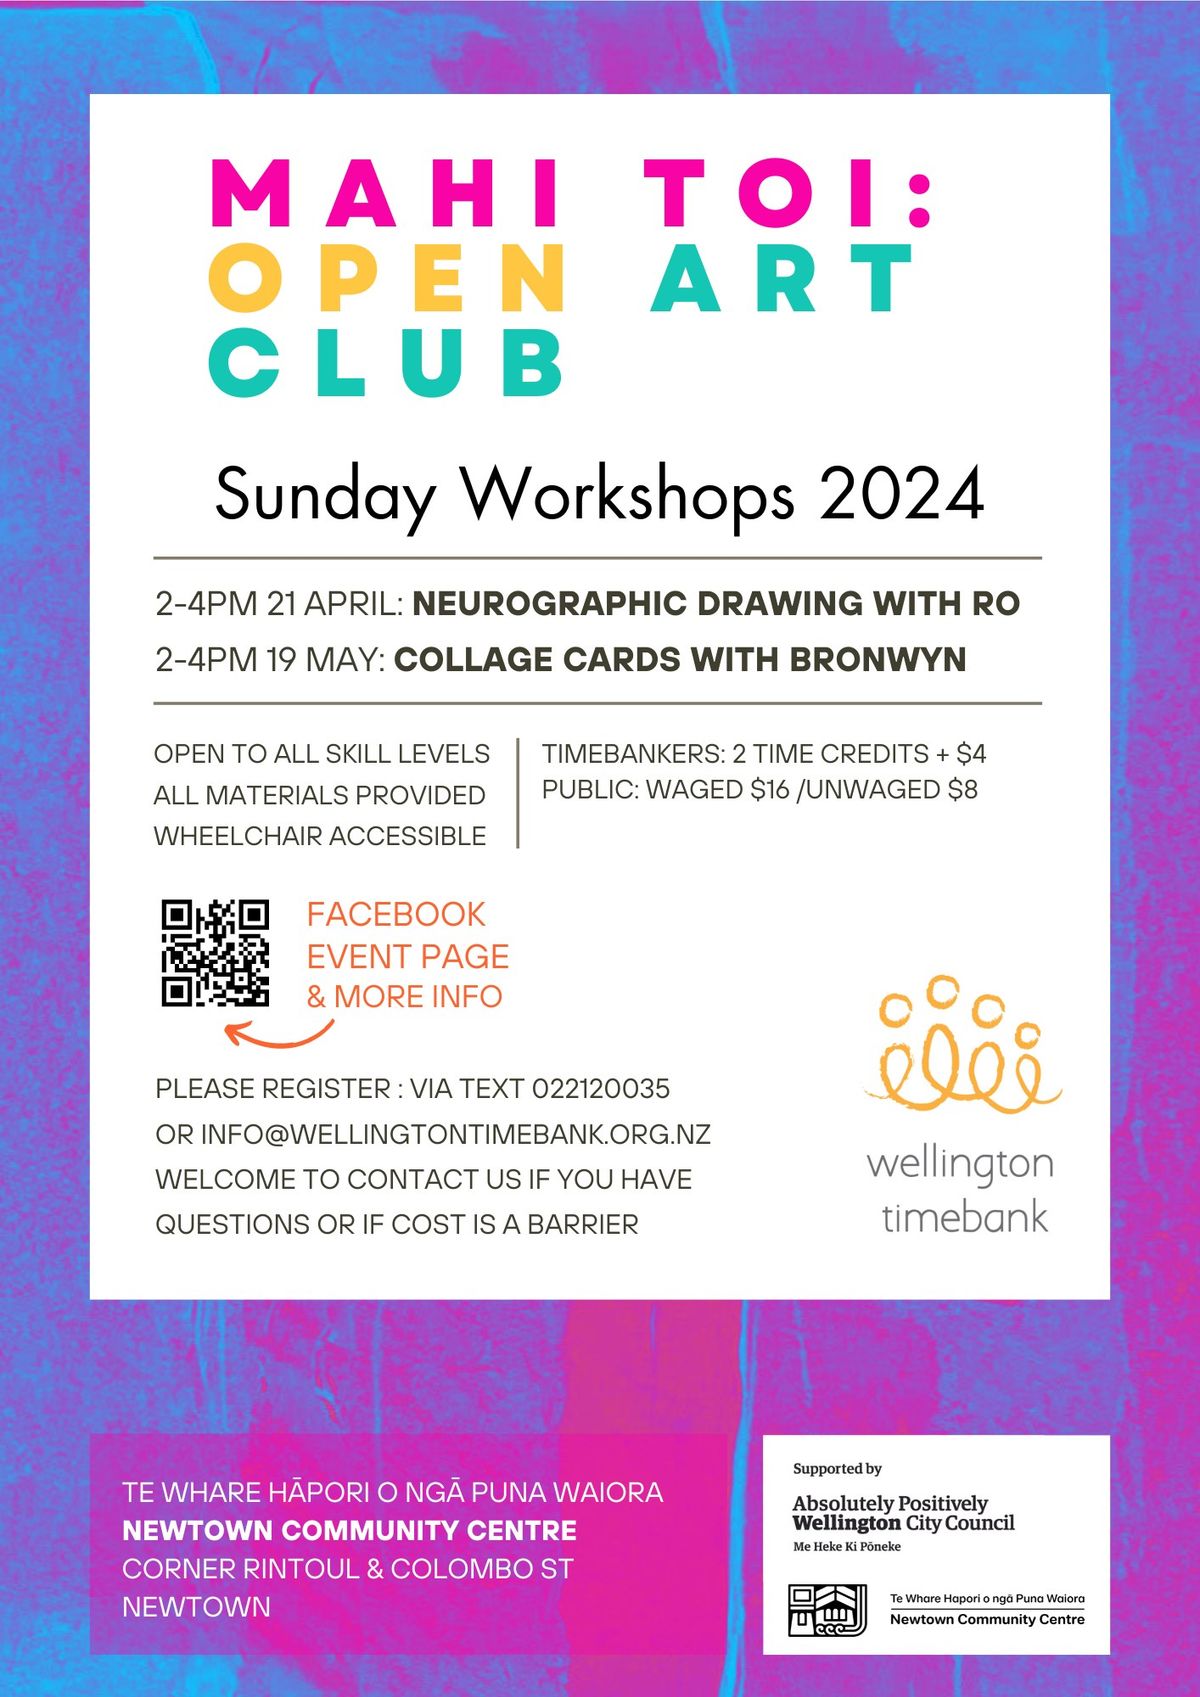 Collage Cards & Creativity: WELLINGTON TIMEBANK - Mahi Toi: Open Art Club Monthly Workshops